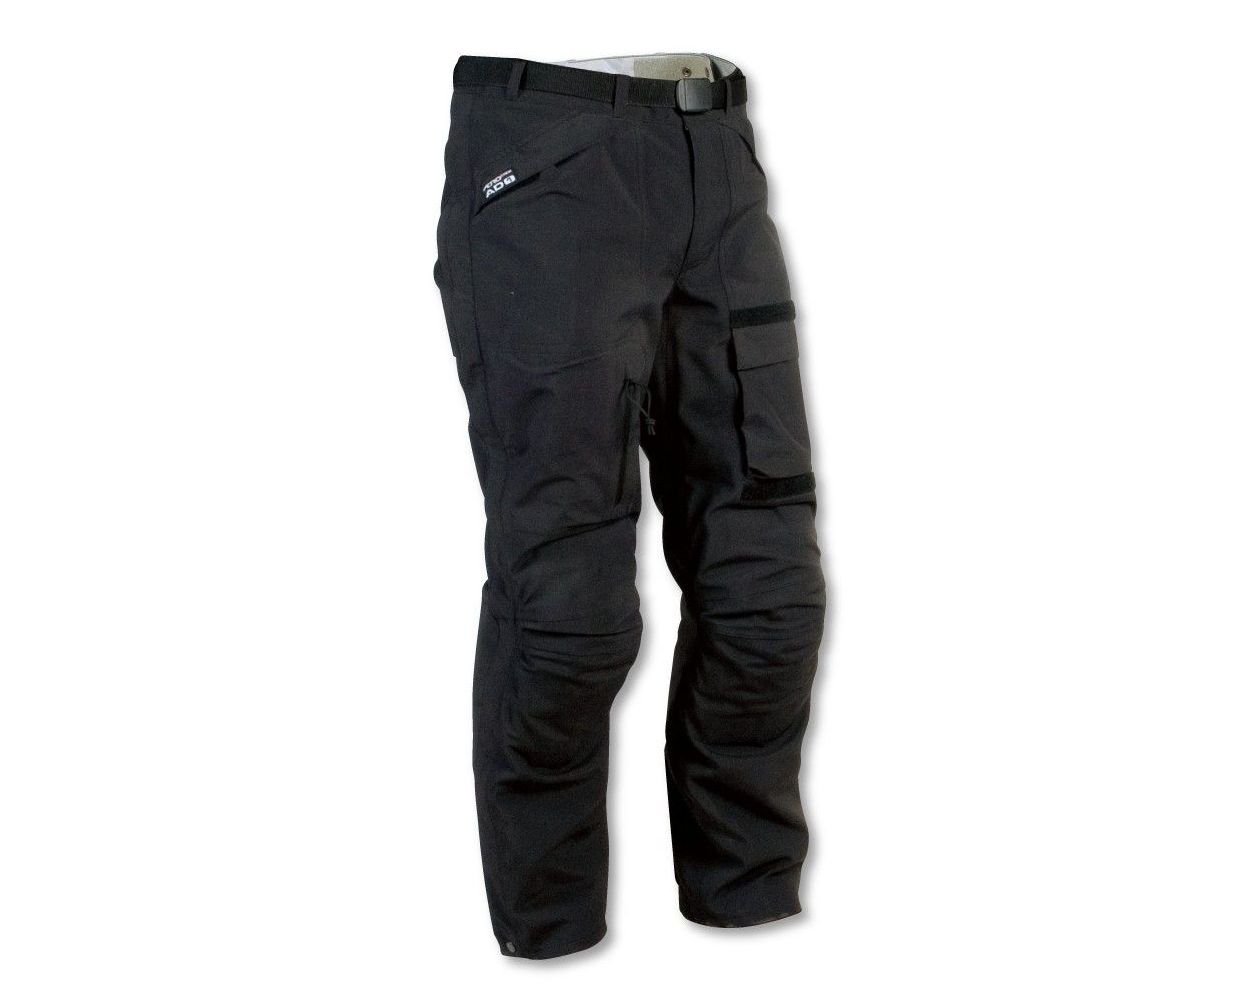 DSCP by Tennessee Apparel Corp. Men's Black Dress Trousers Pants Size 34L |  #3834238660